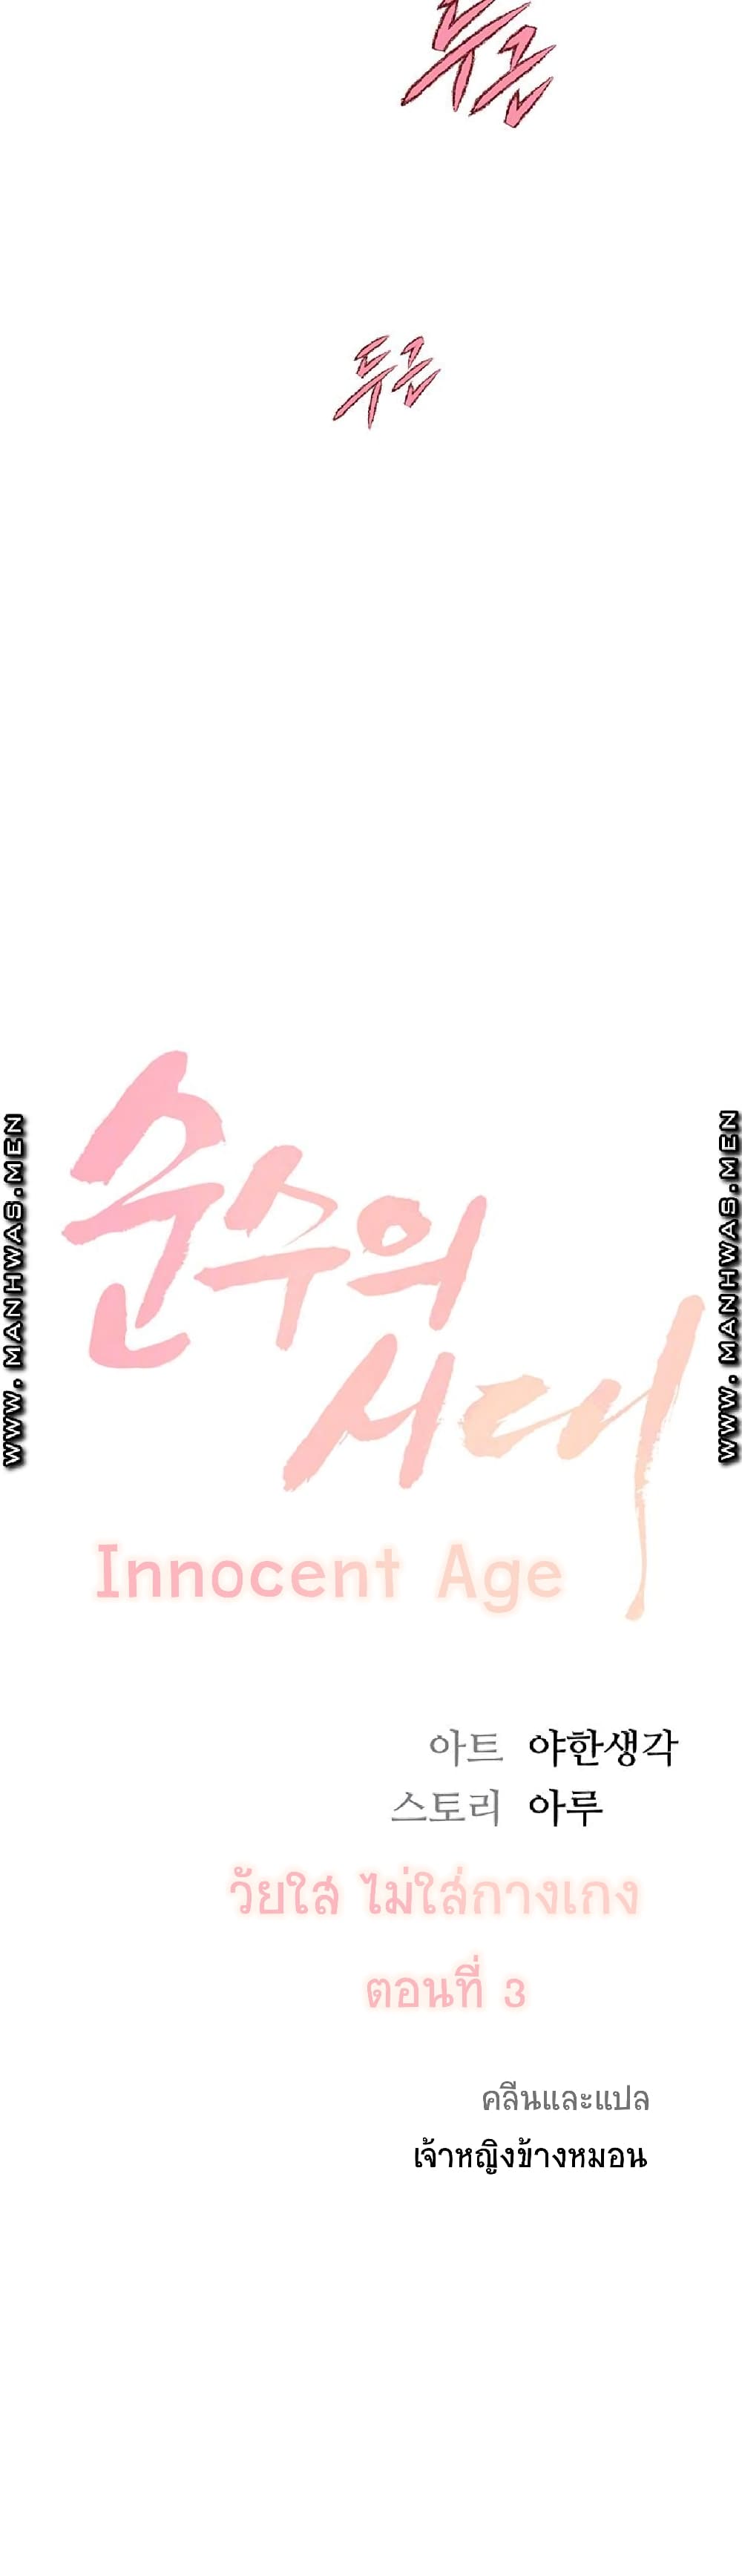 Age of Innocence 3 04